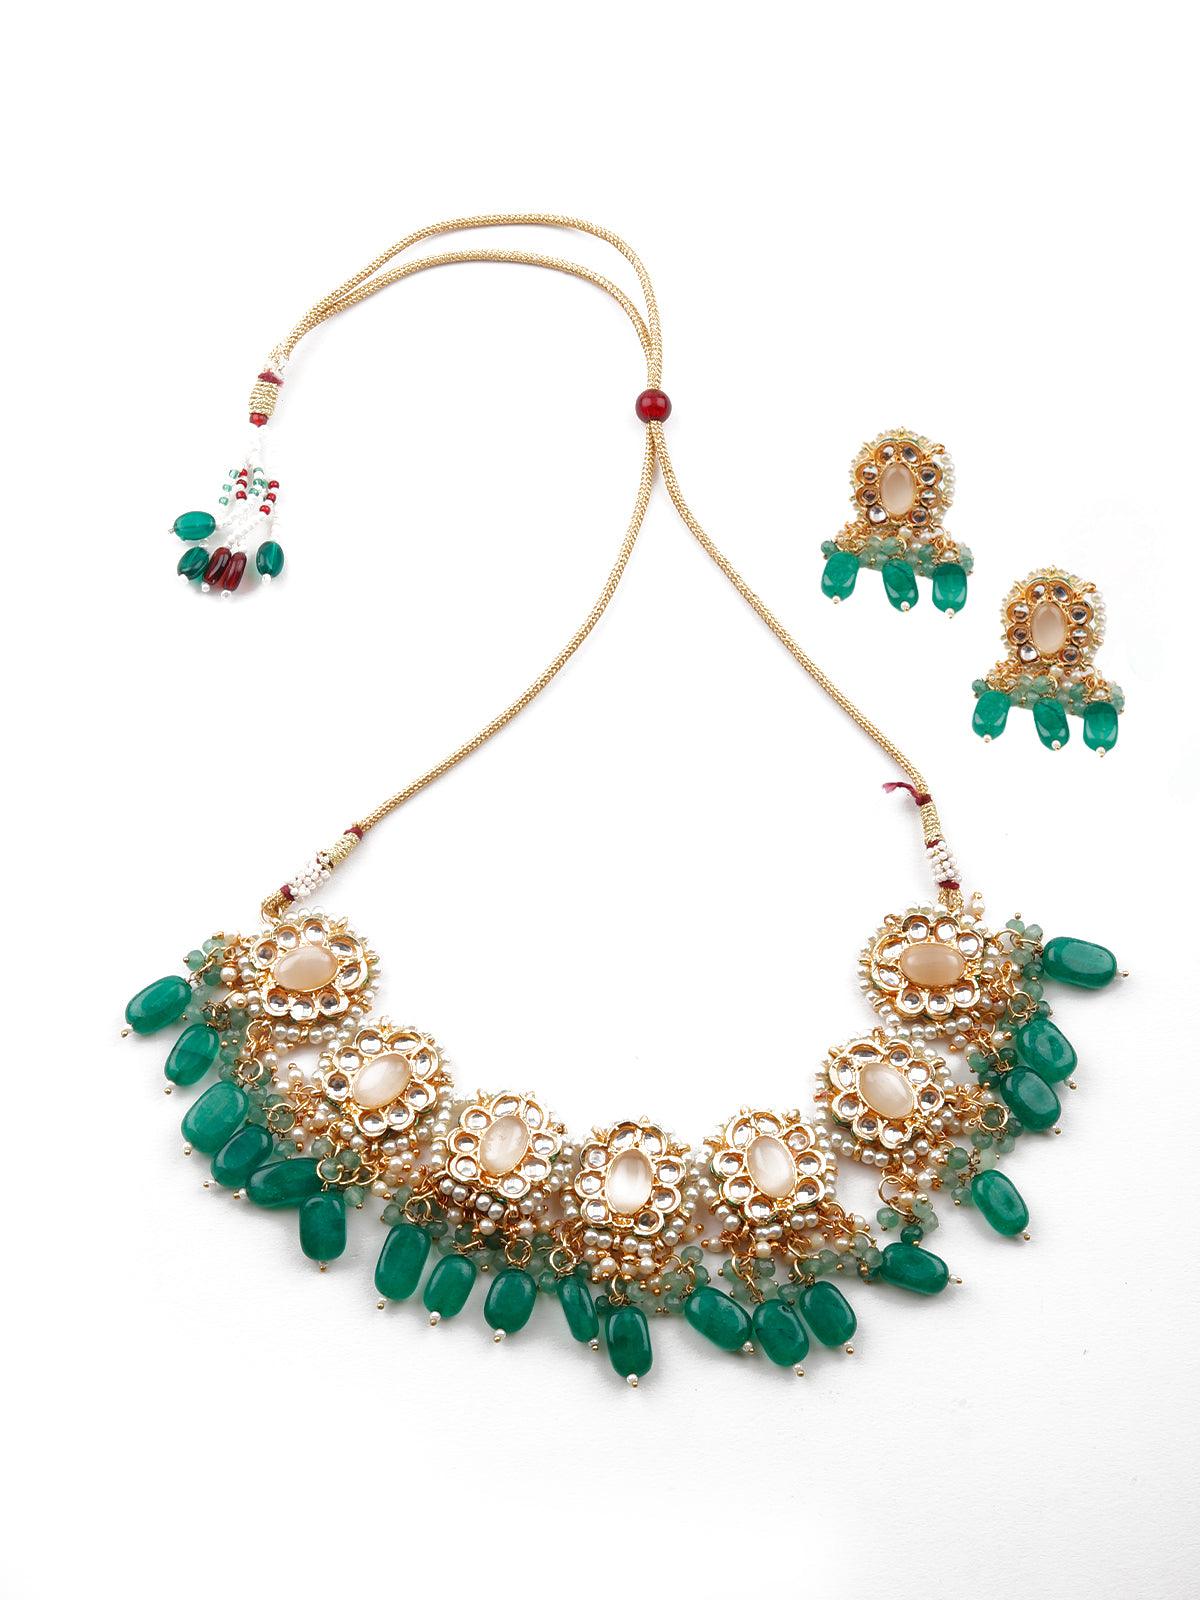 Stunning green kundan necklace - Odette